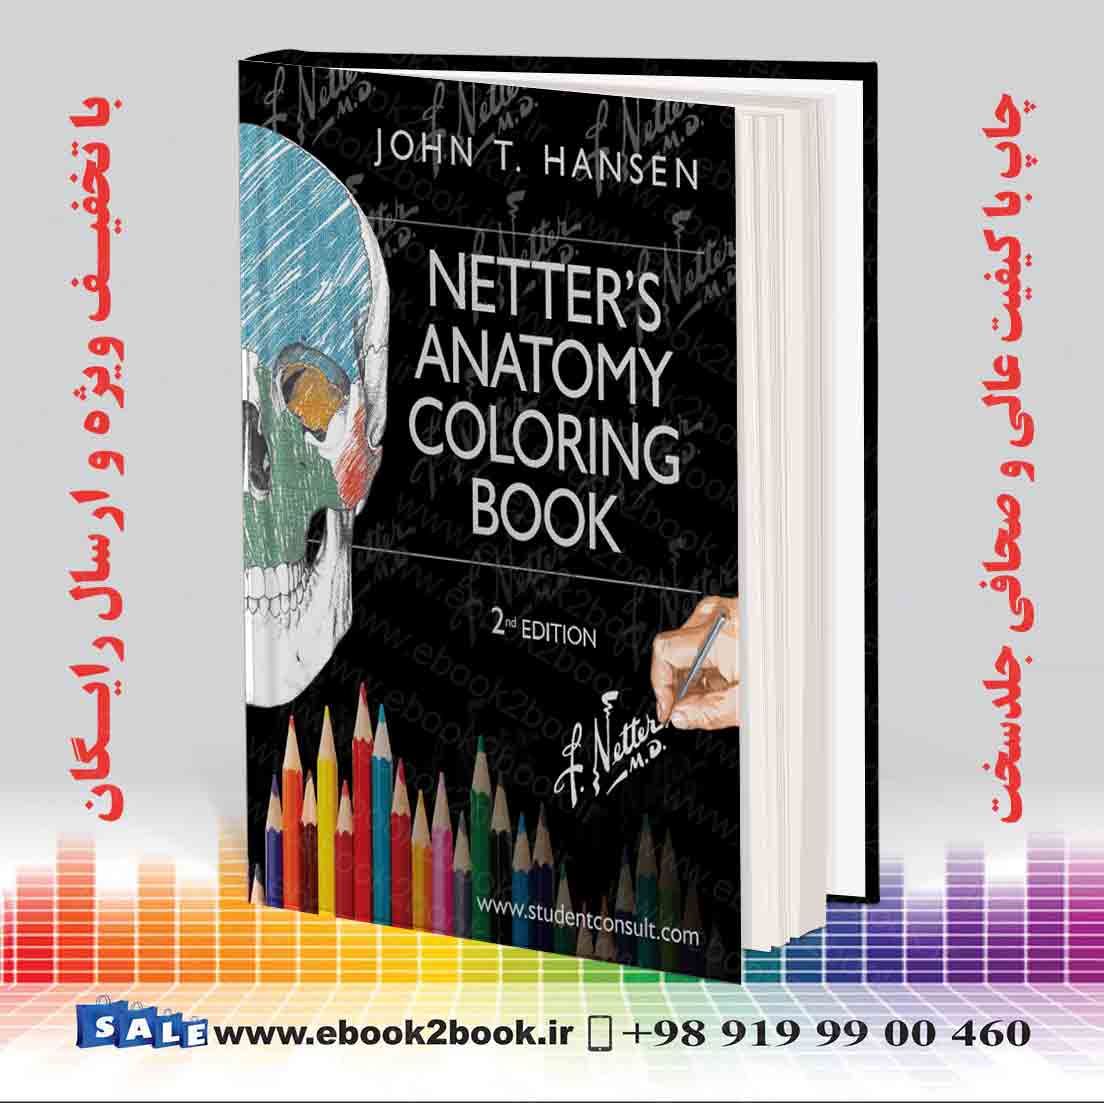 Download The Netter's Anatomy Coloring Book, 2th edition | فروشگاه کتاب ایبوک تو بوک